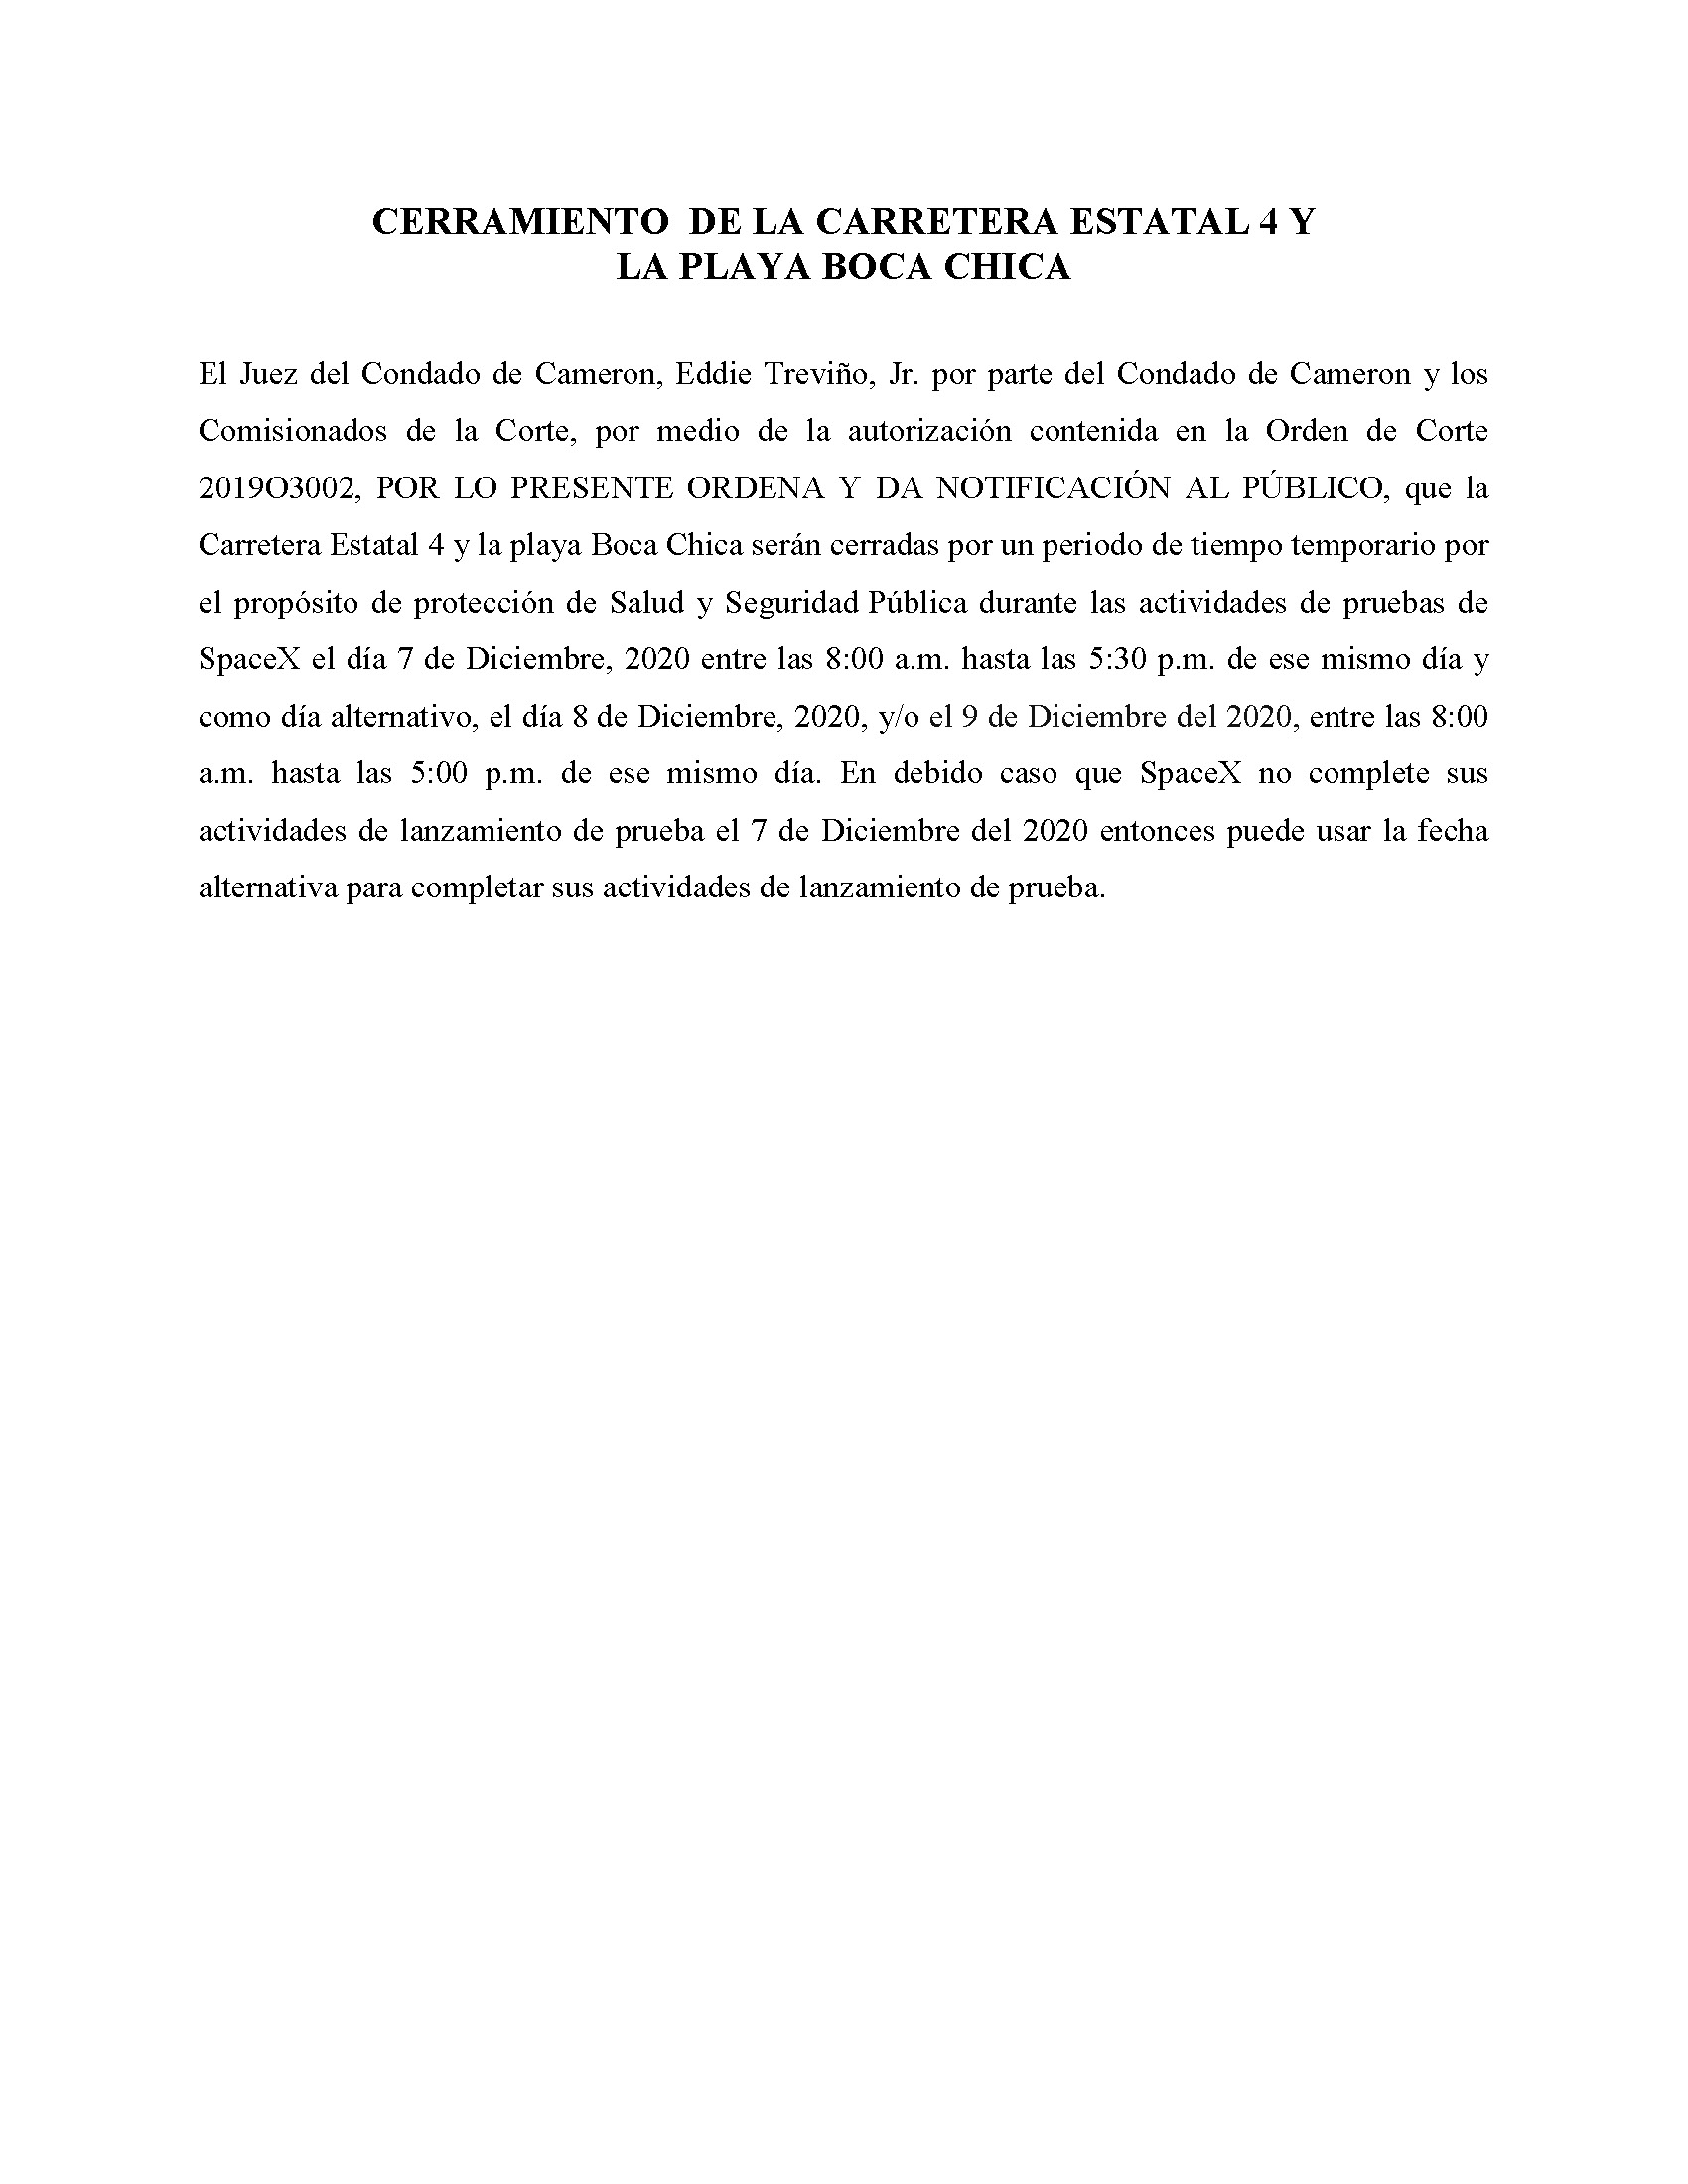 ORDER.CLOSURE OF HIGHWAY 4 Y LA PLAYA BOCA CHICA.SPANISH.12.07.2020